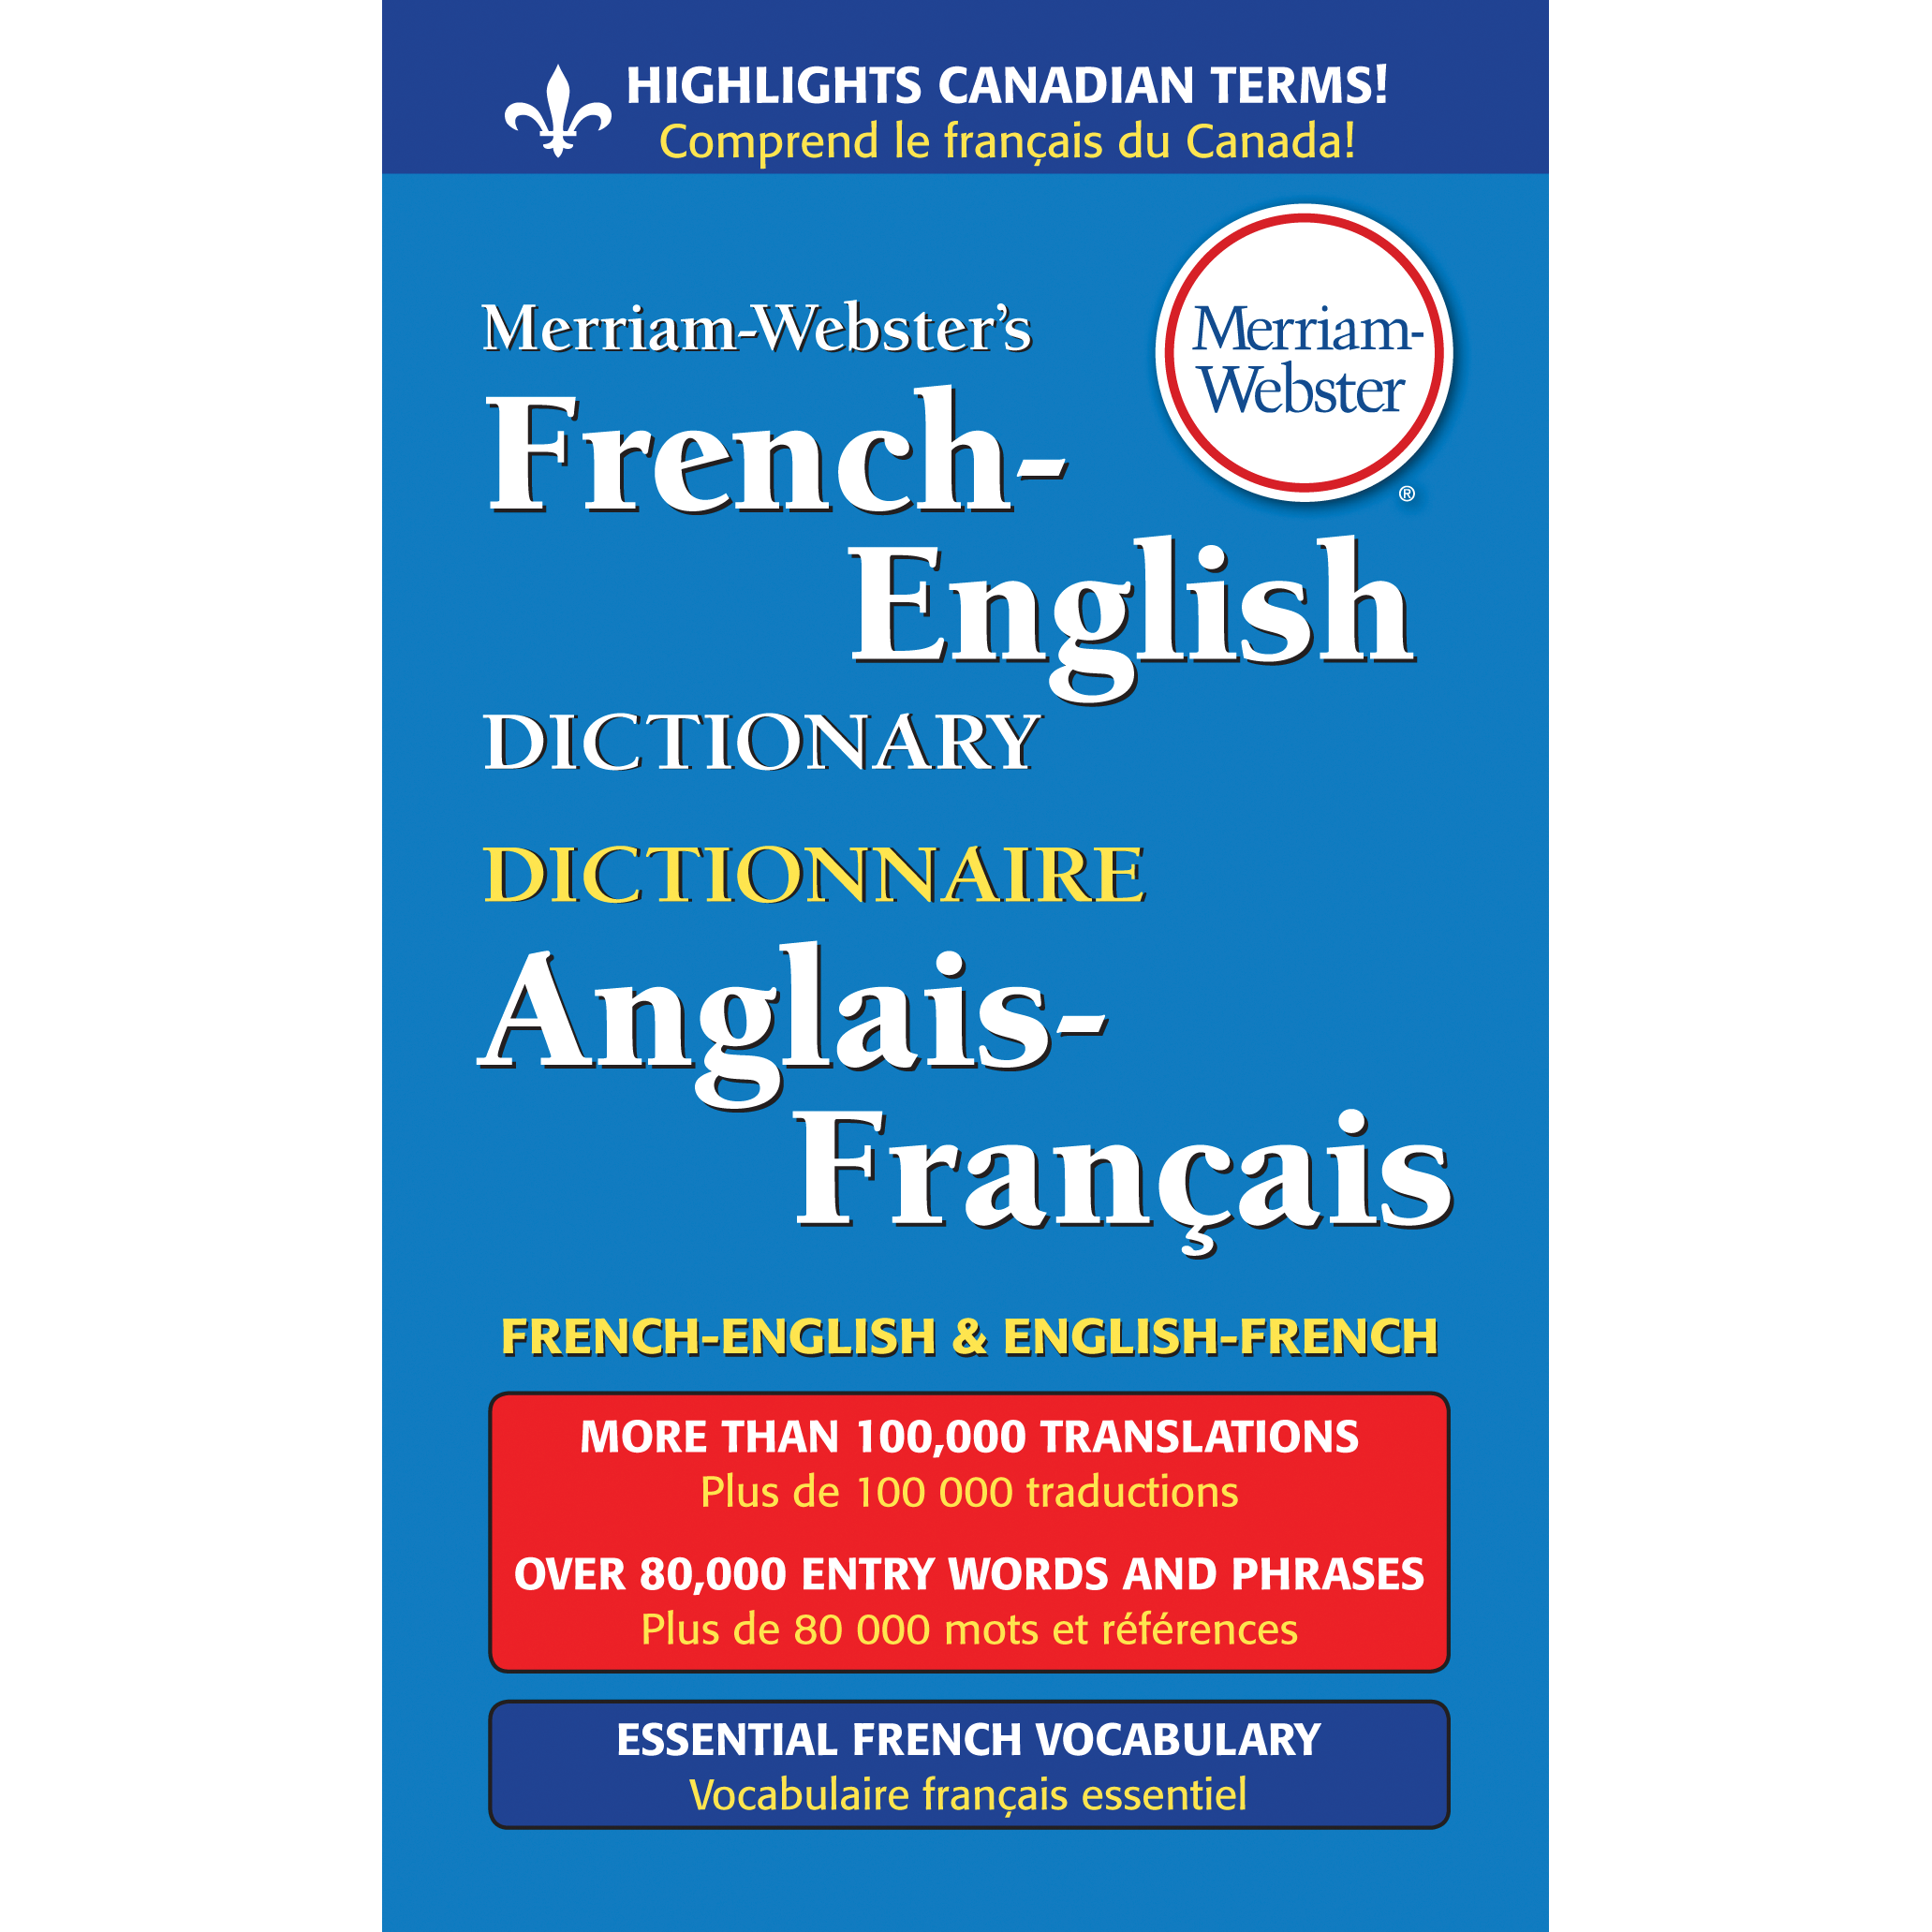 French-English translation book